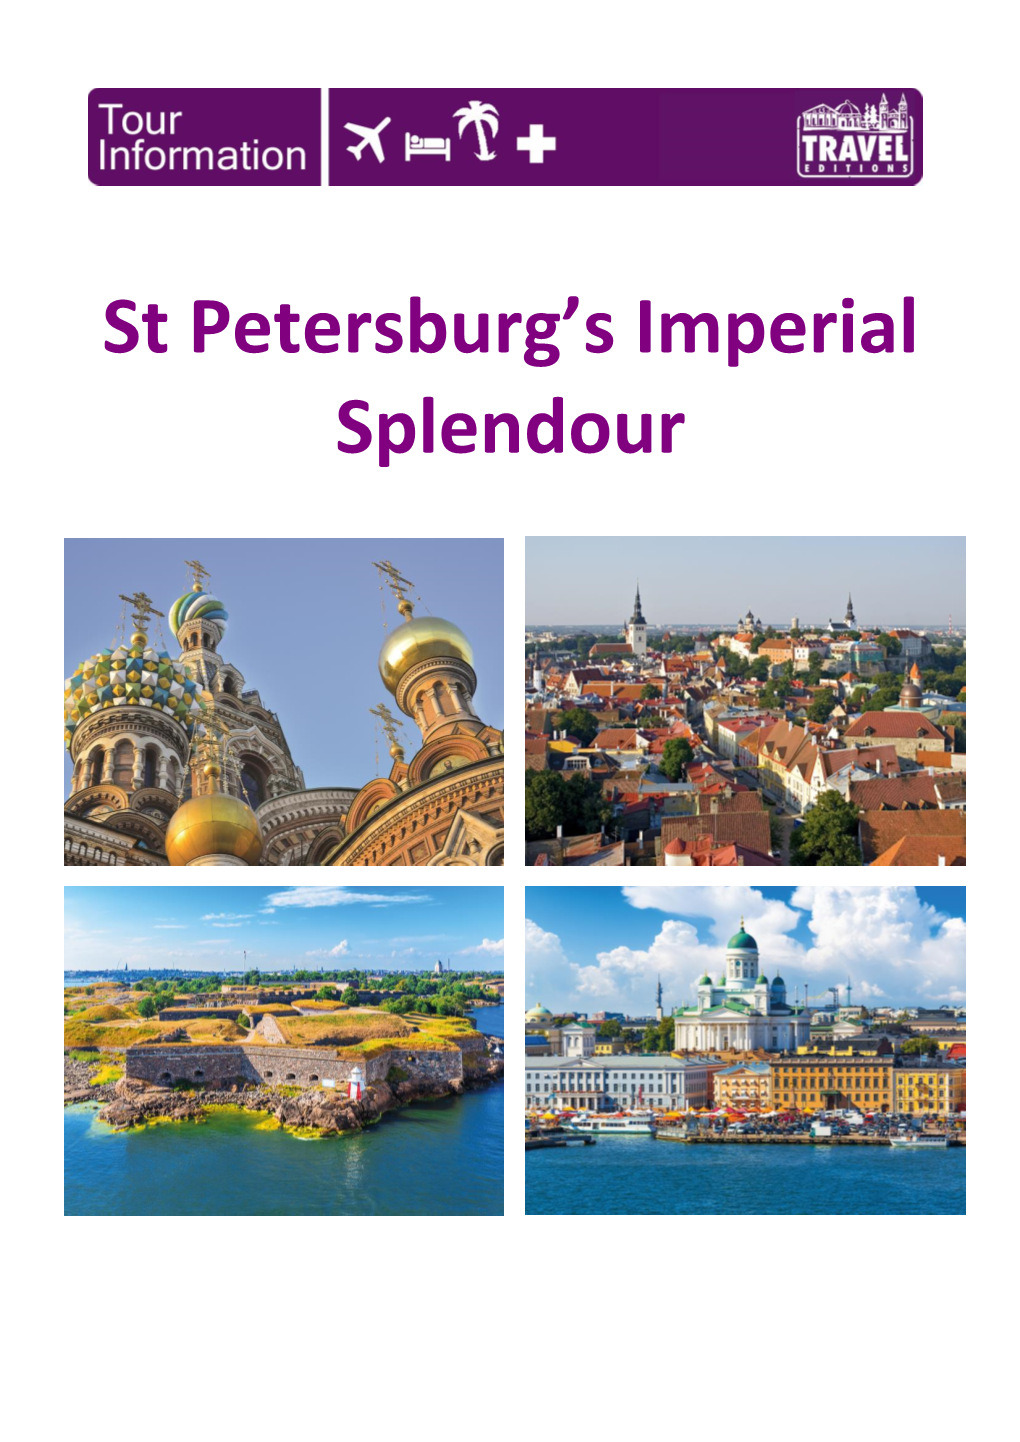 St Petersburg's Imperial Splendour